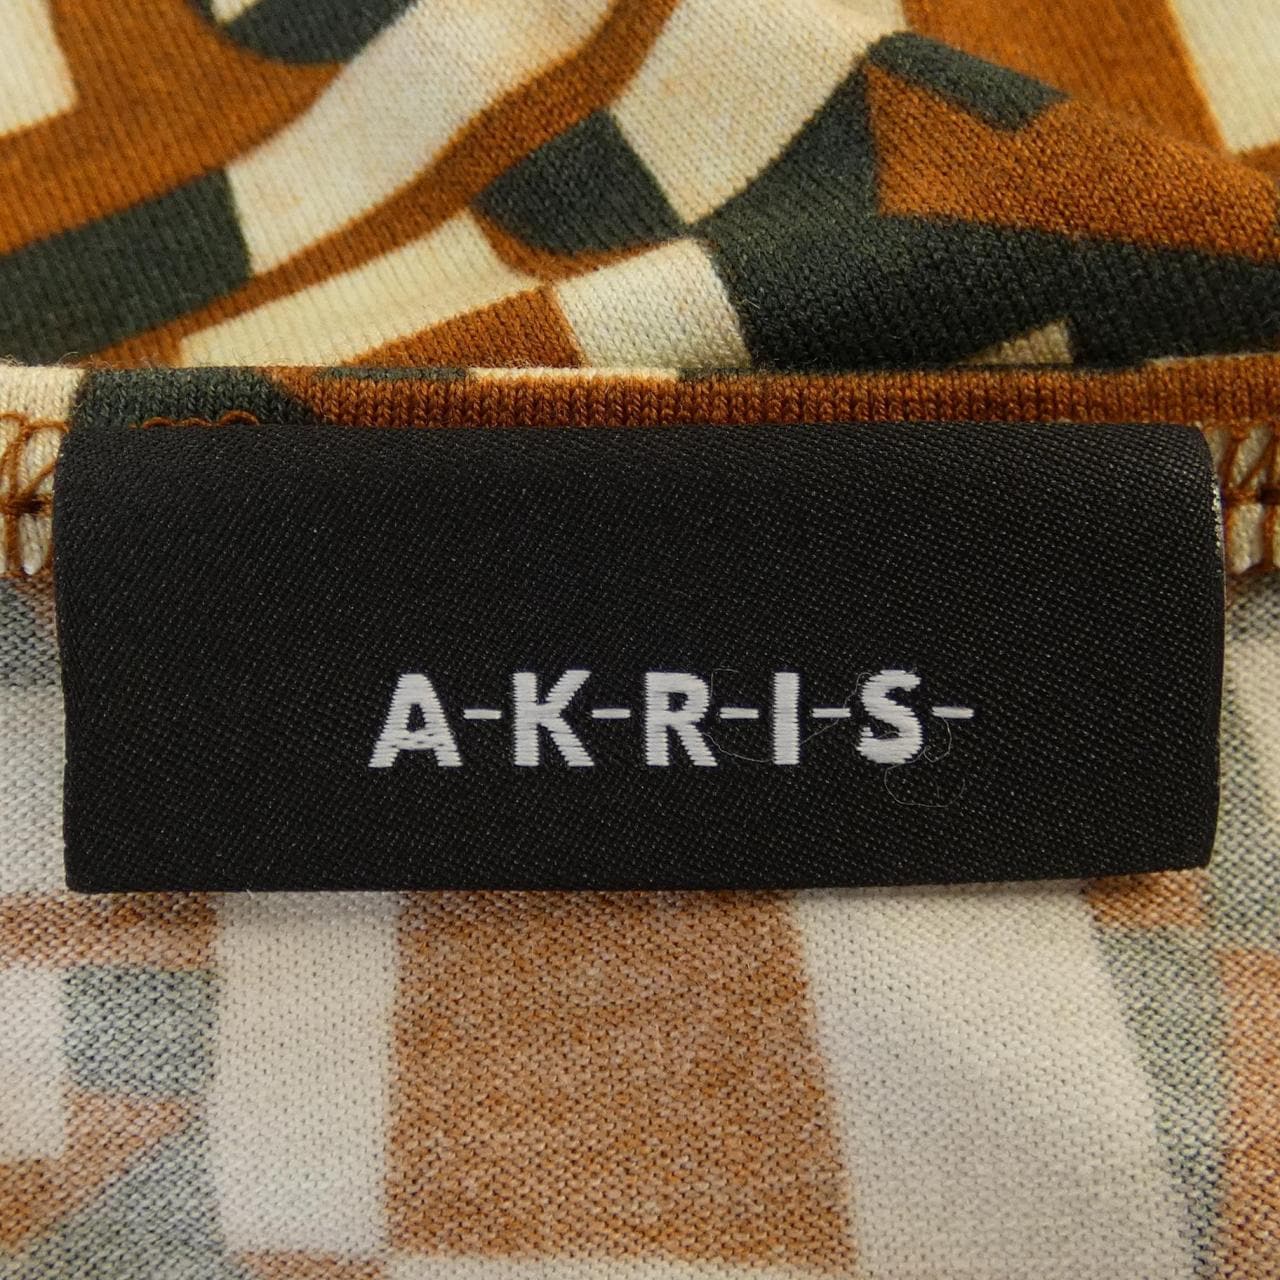 AKRIS S/S shirt